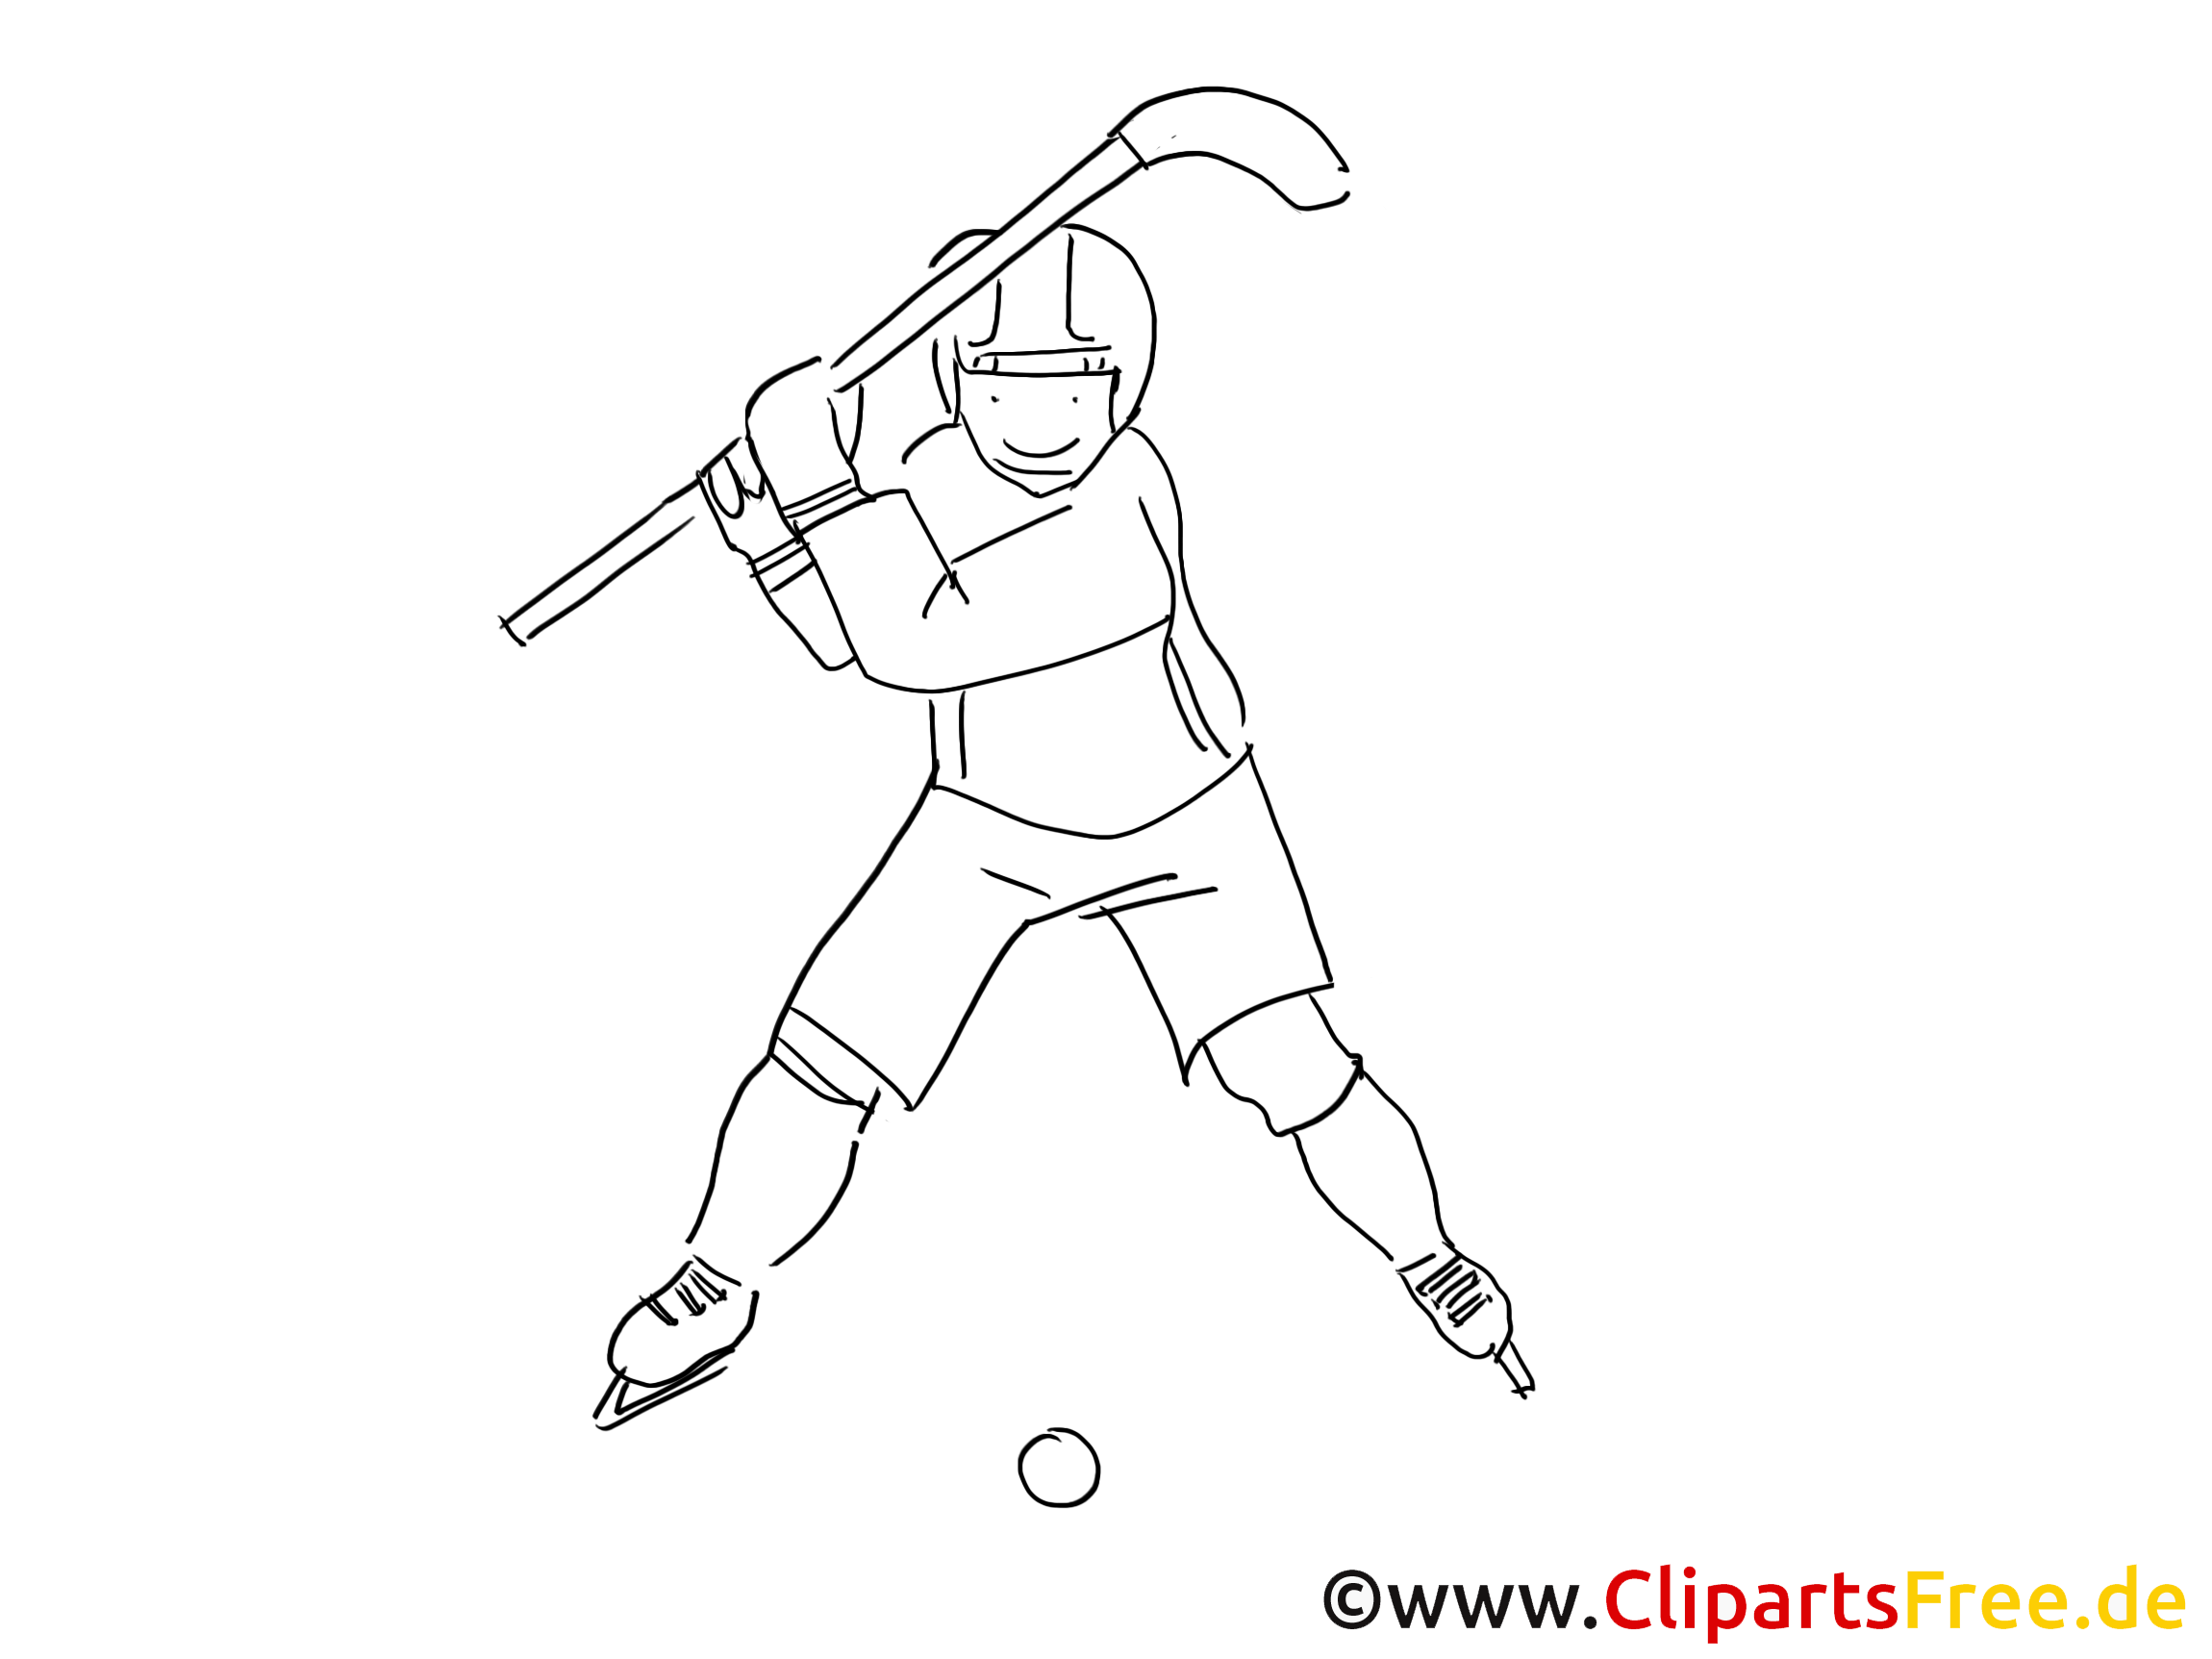 Clipart à colorier hockeyeur - Hockey dessins gratuits